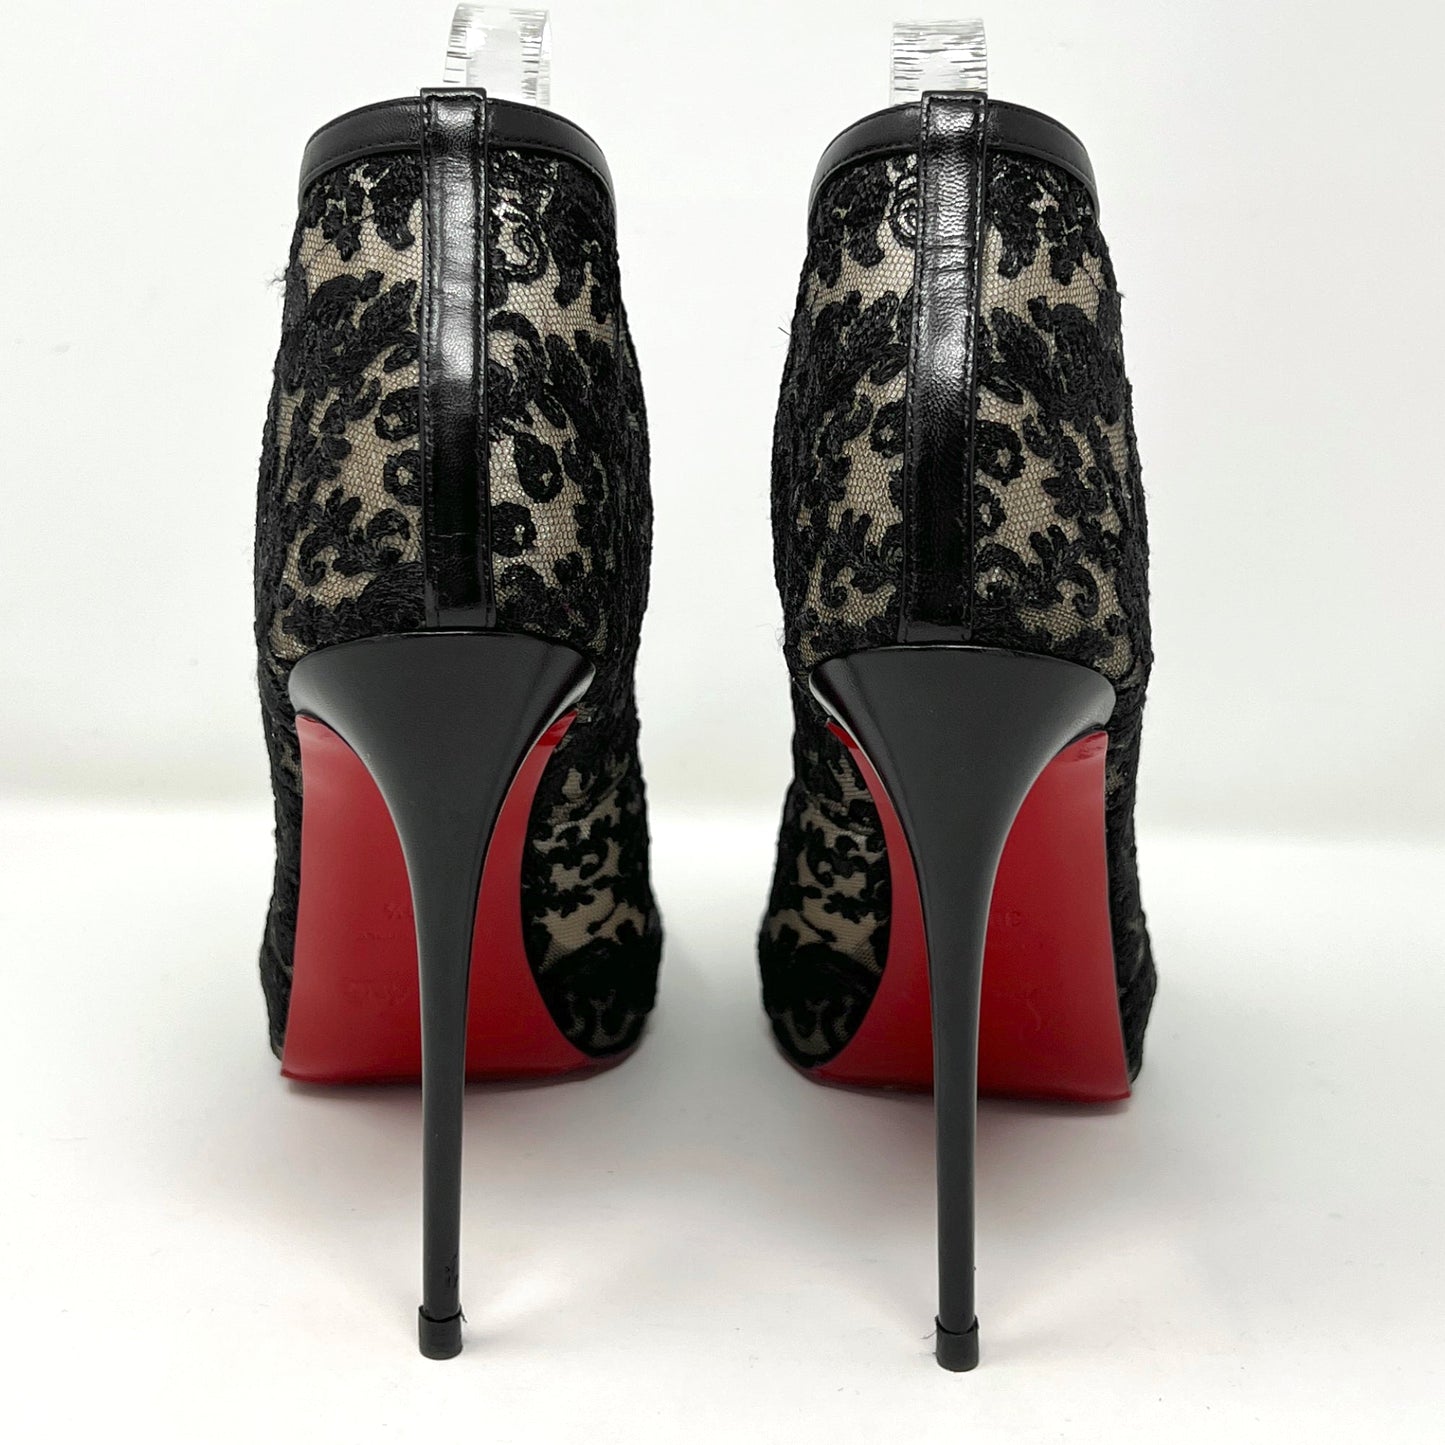 Christian Louboutin Top Top Black Lace Leather Trim Peep Toe Ankle Boots Pumps Size EU 39.5